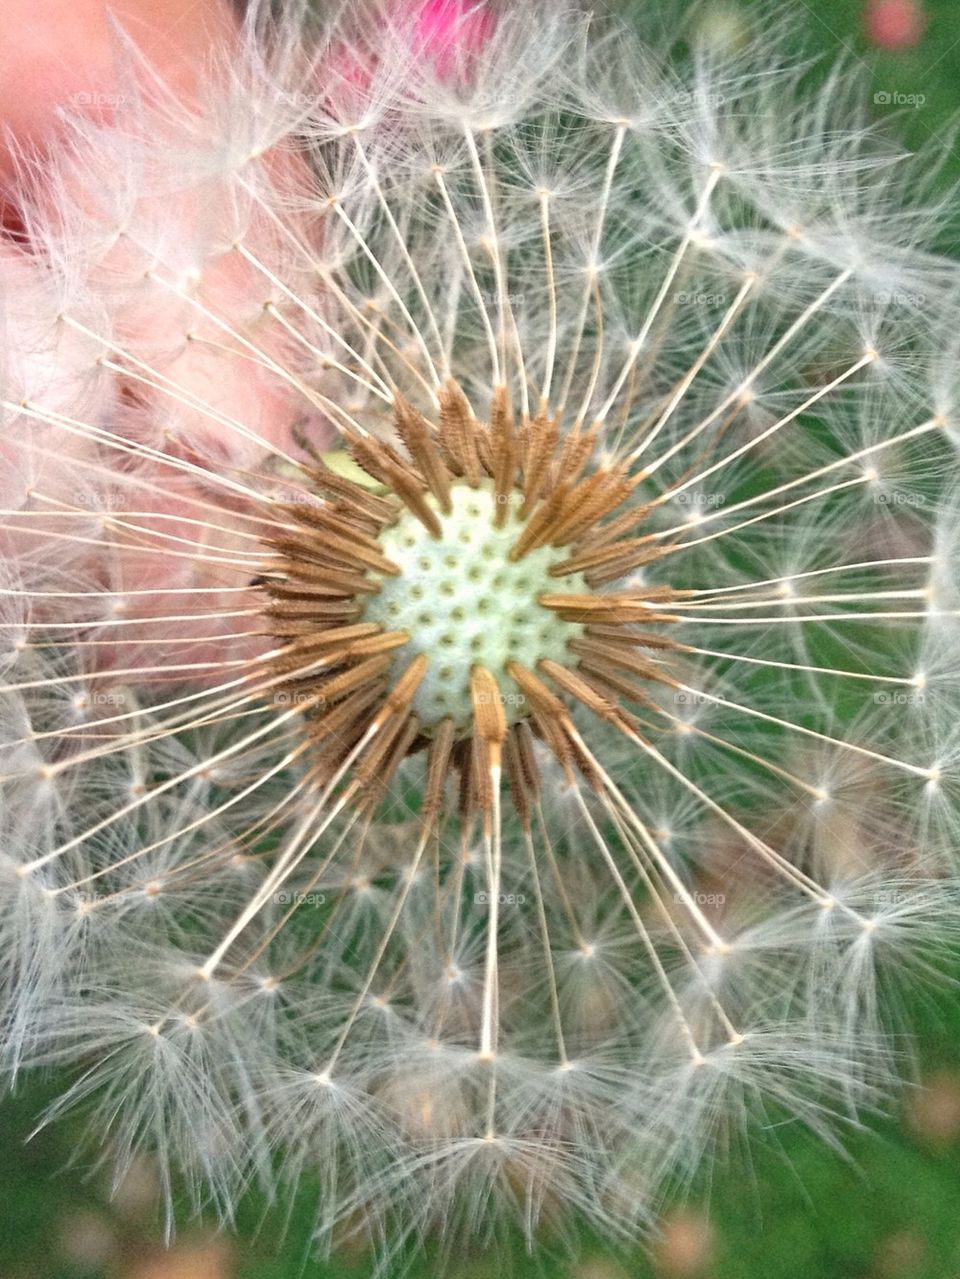 Extreme close-up of dandelion flower